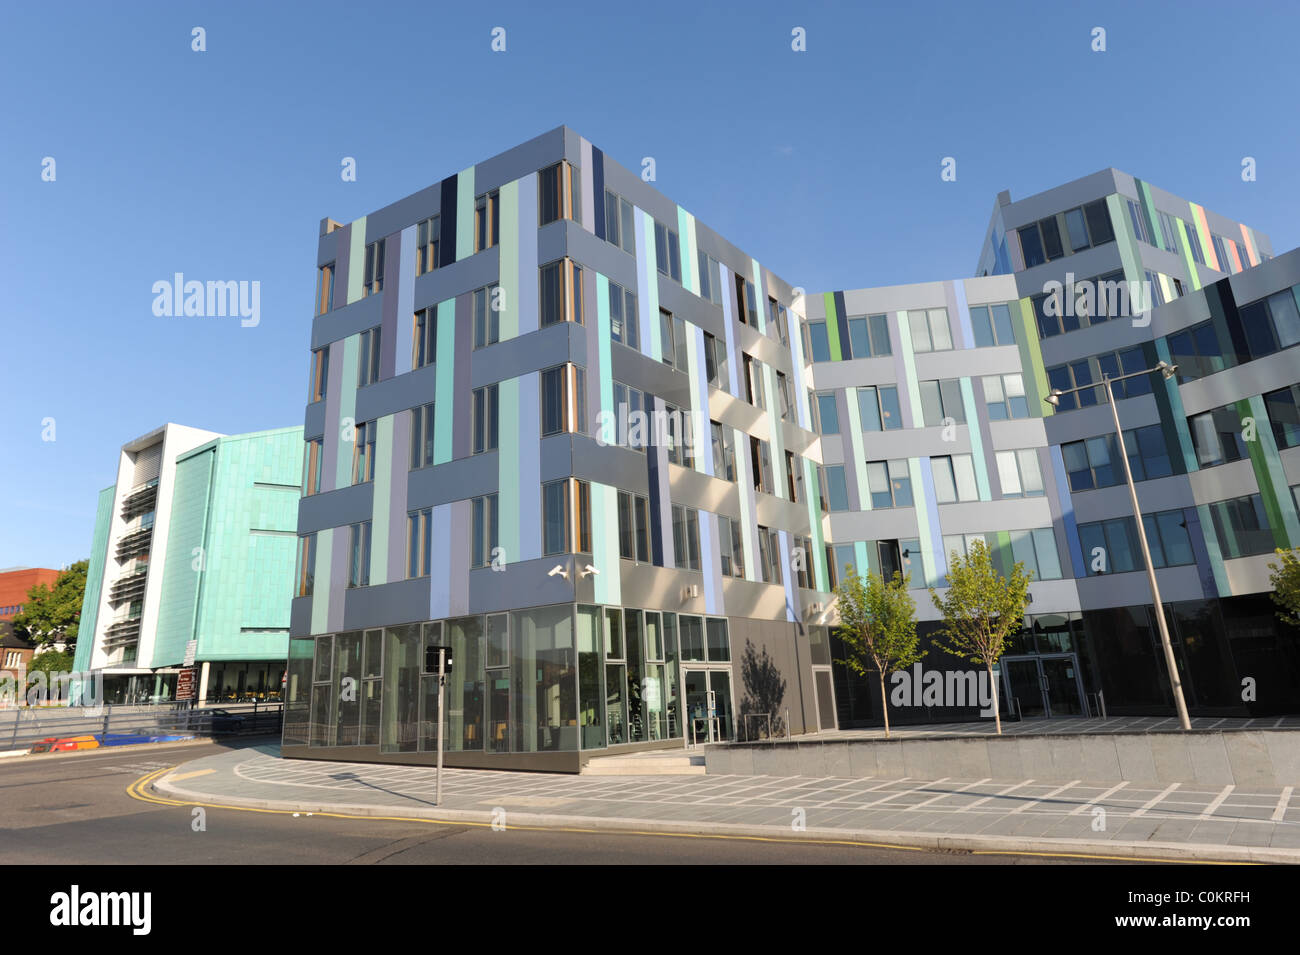 Moderni edifici architettonici su Sheffield University Campus Foto Stock